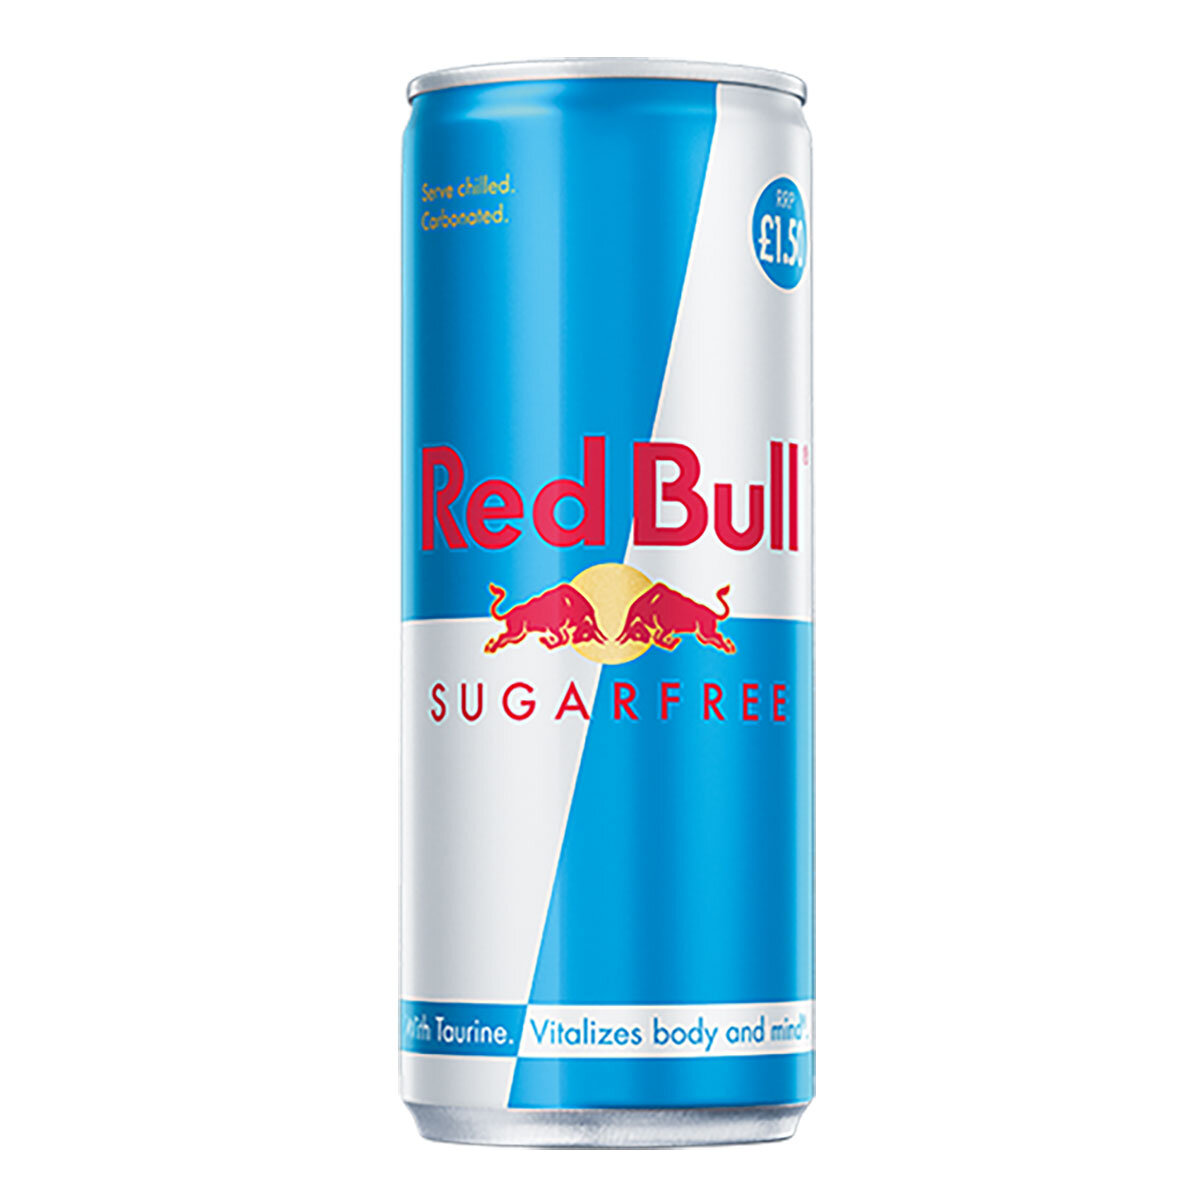 Red Bull Sugar Free PMP £1.50, 250ml